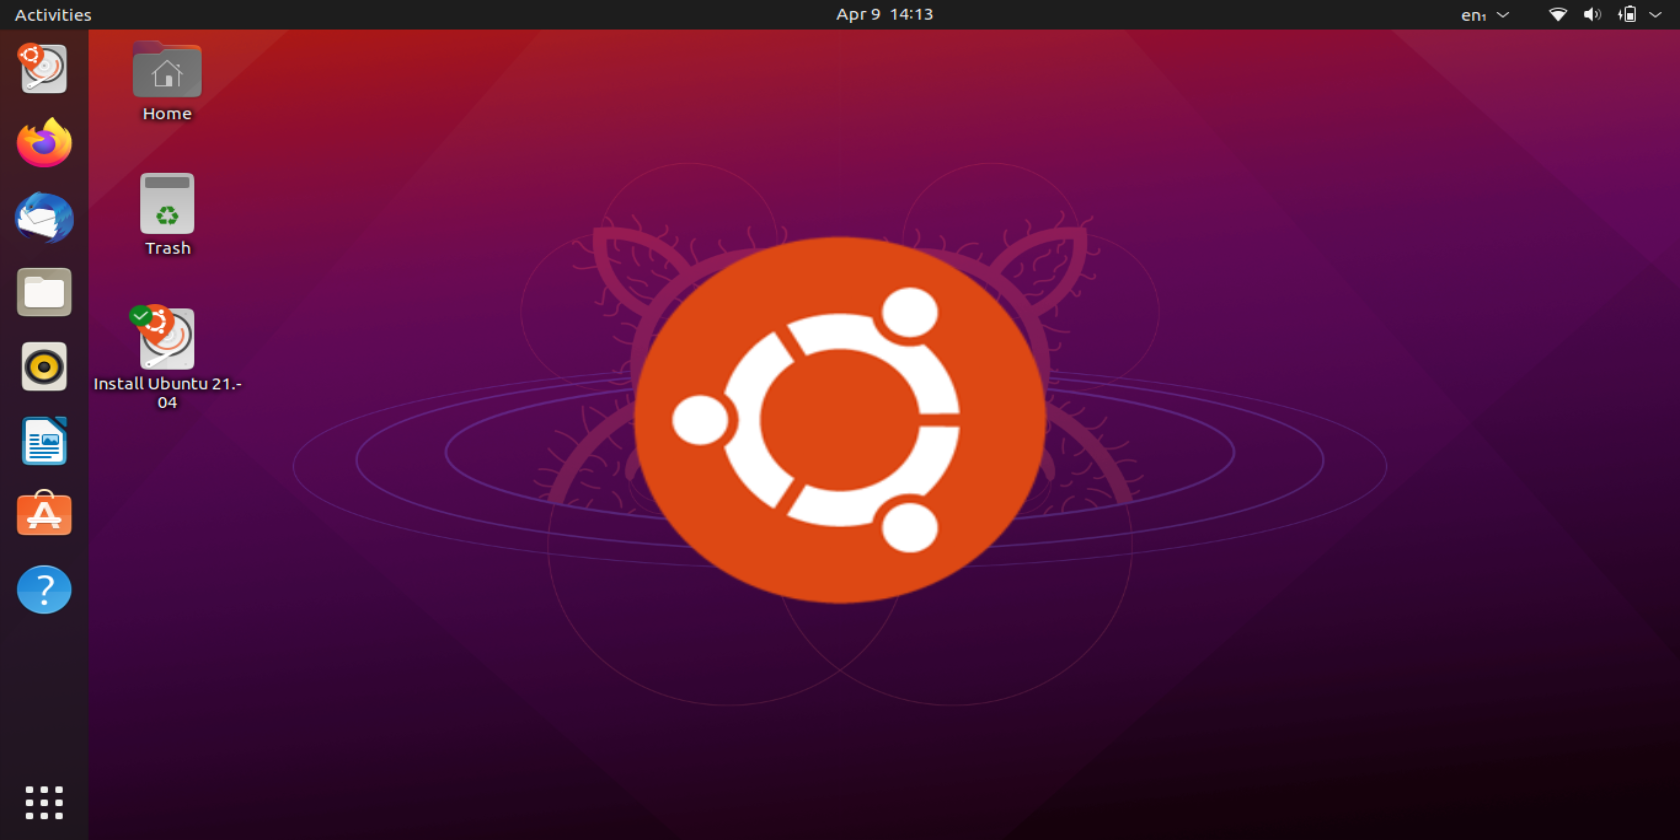 ubuntu android studio installation